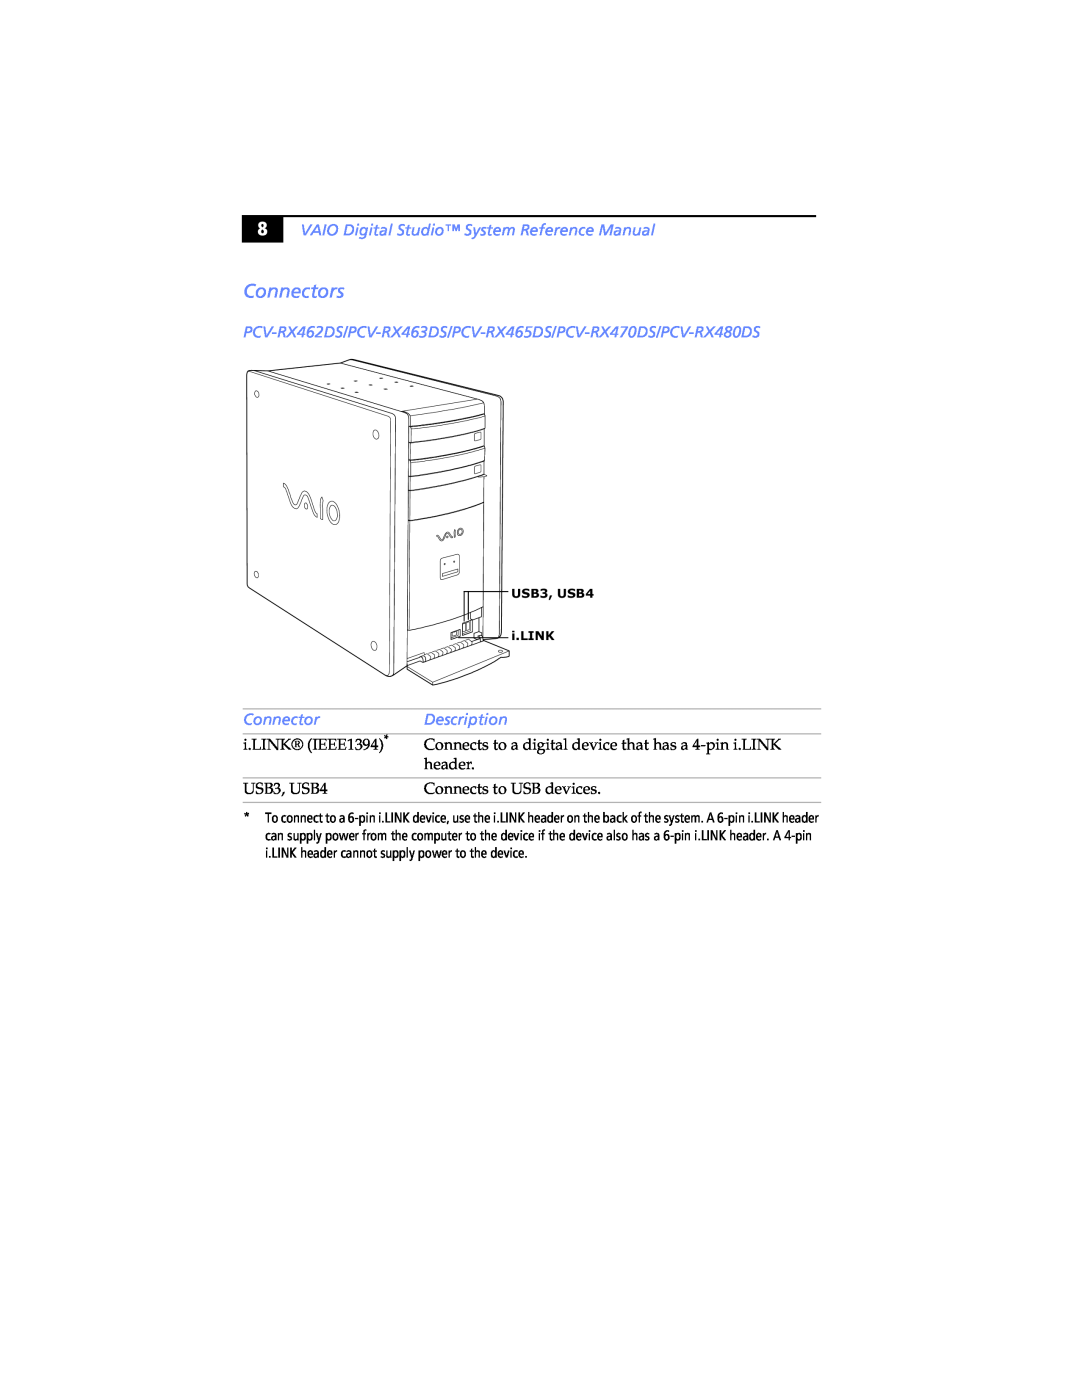 Sony PCV-RX463DS Connectors, VAIO Digital Studio System Reference Manual, Description, i.LINK IEEE1394, header, USB3, USB4 